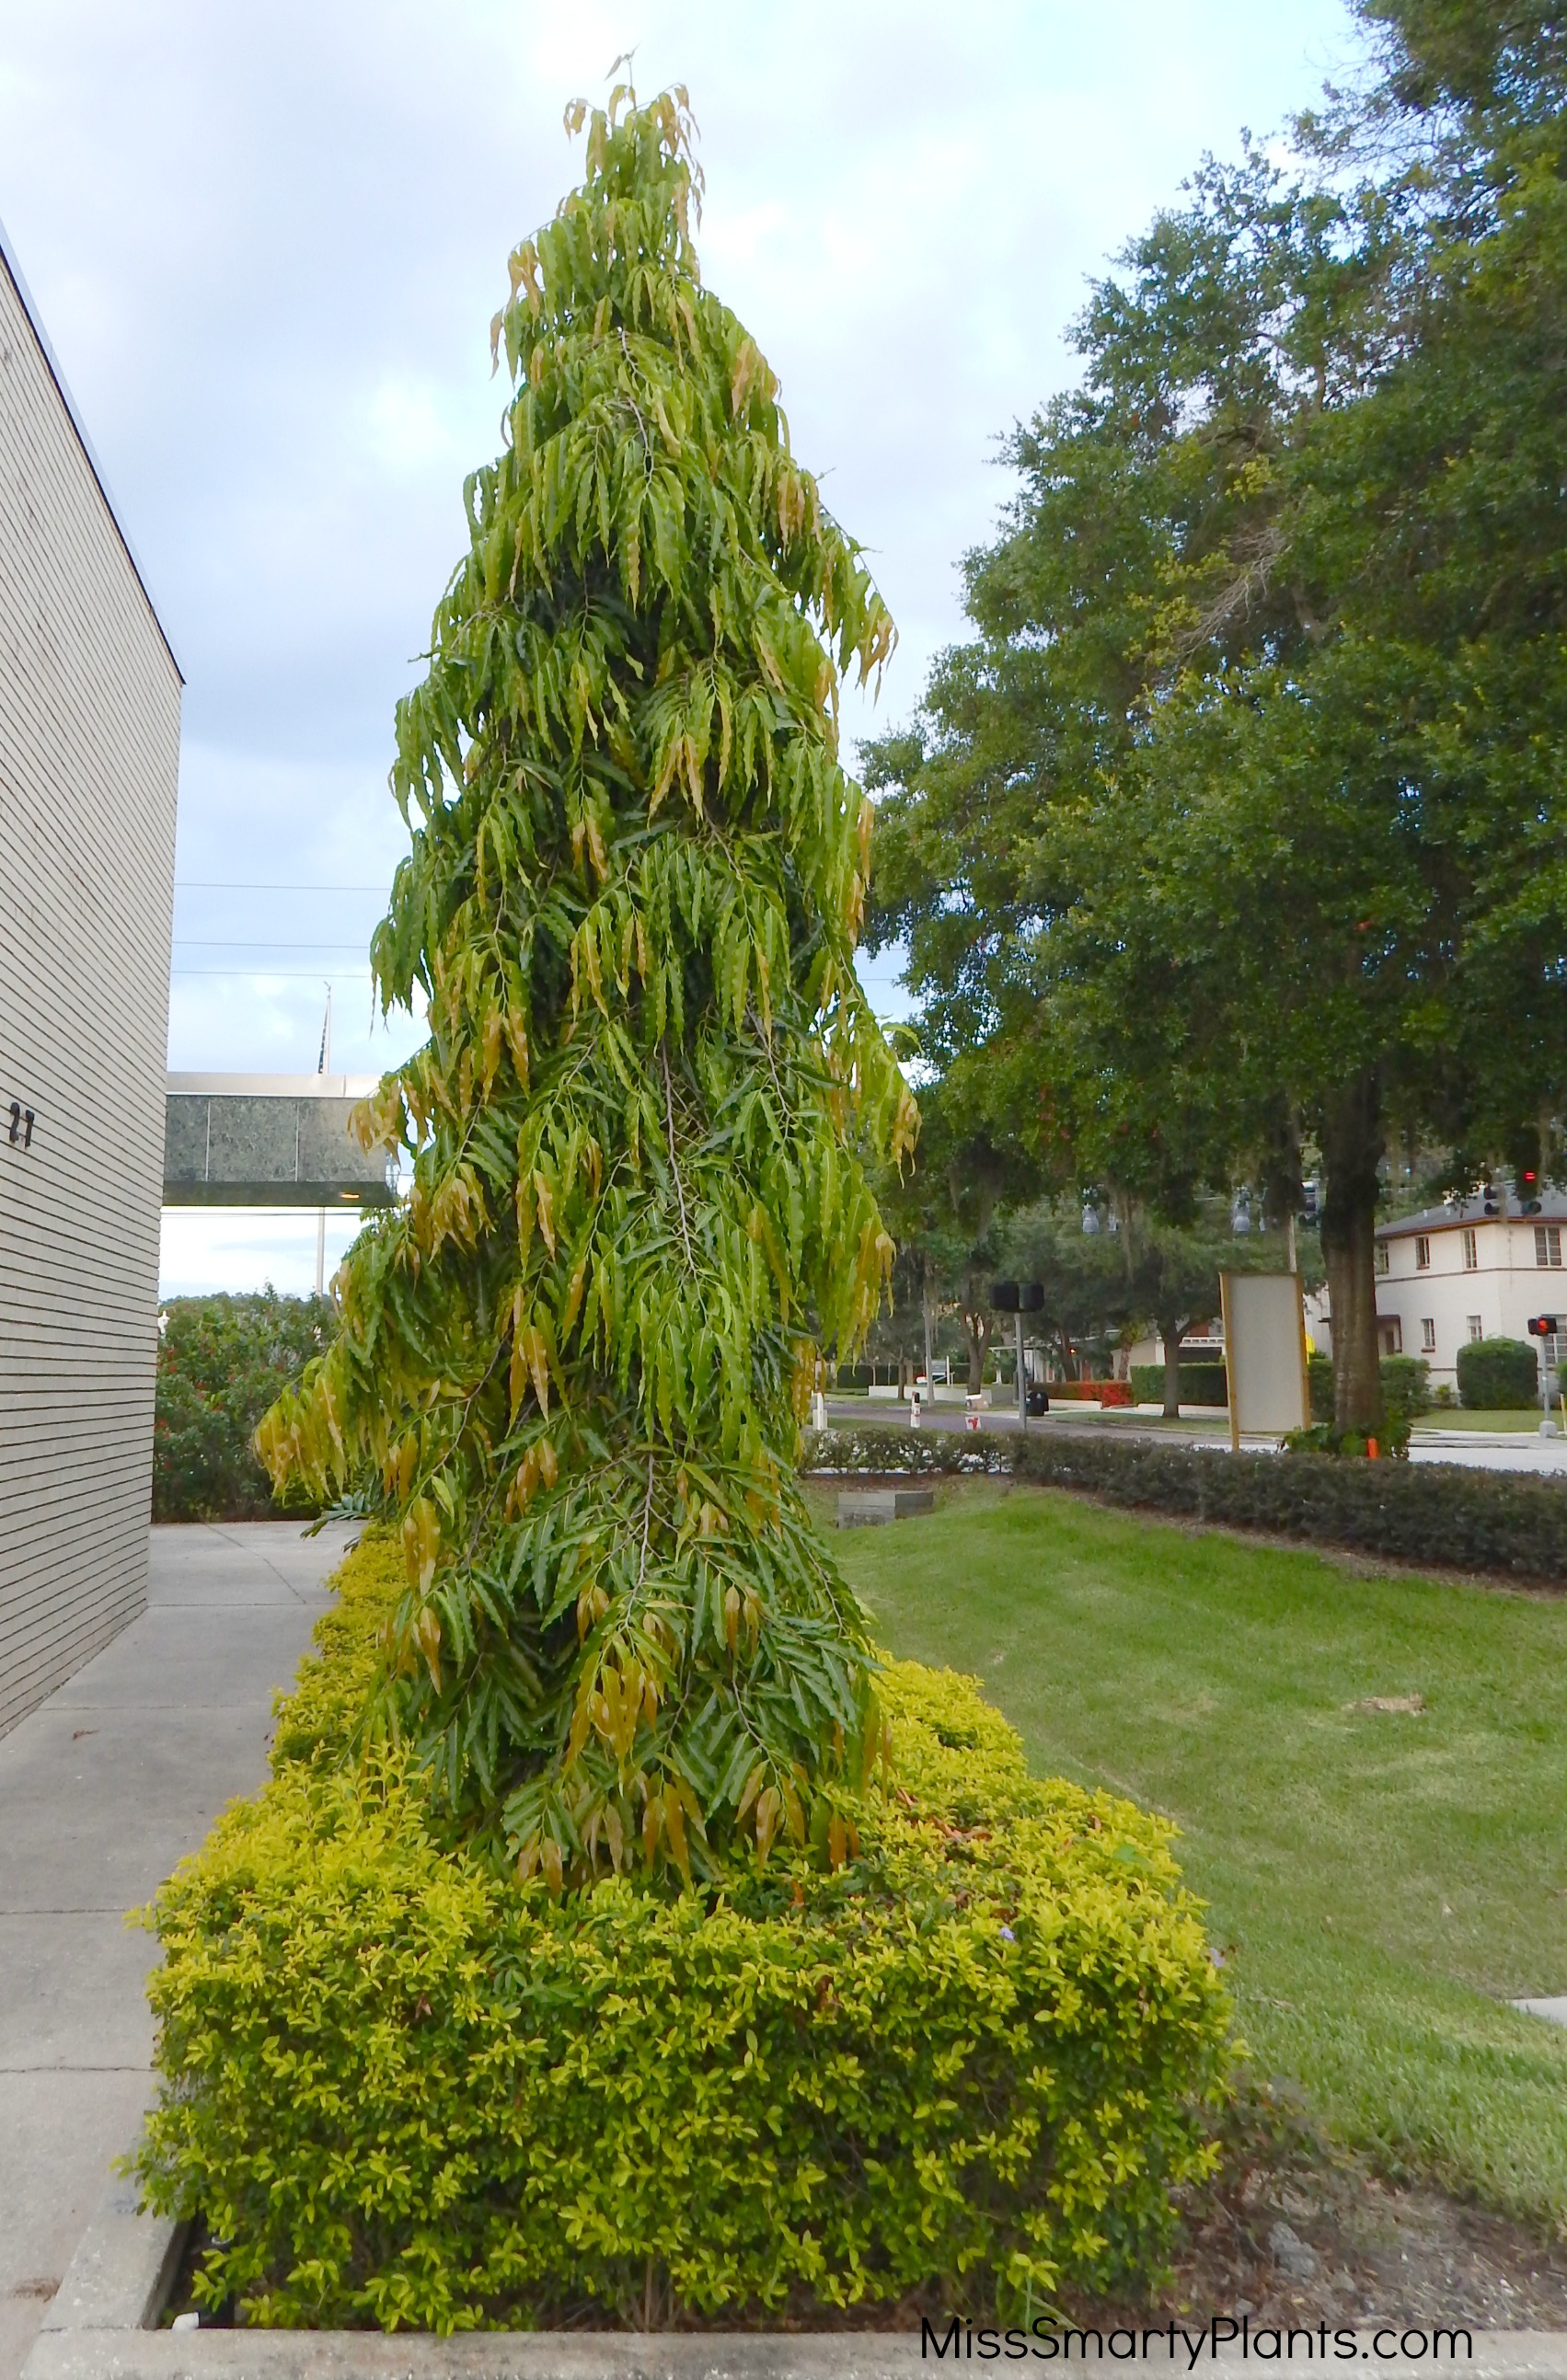 Polyalthia longifolia 'Pendula' or Mast Tree - Miss Smarty Plants